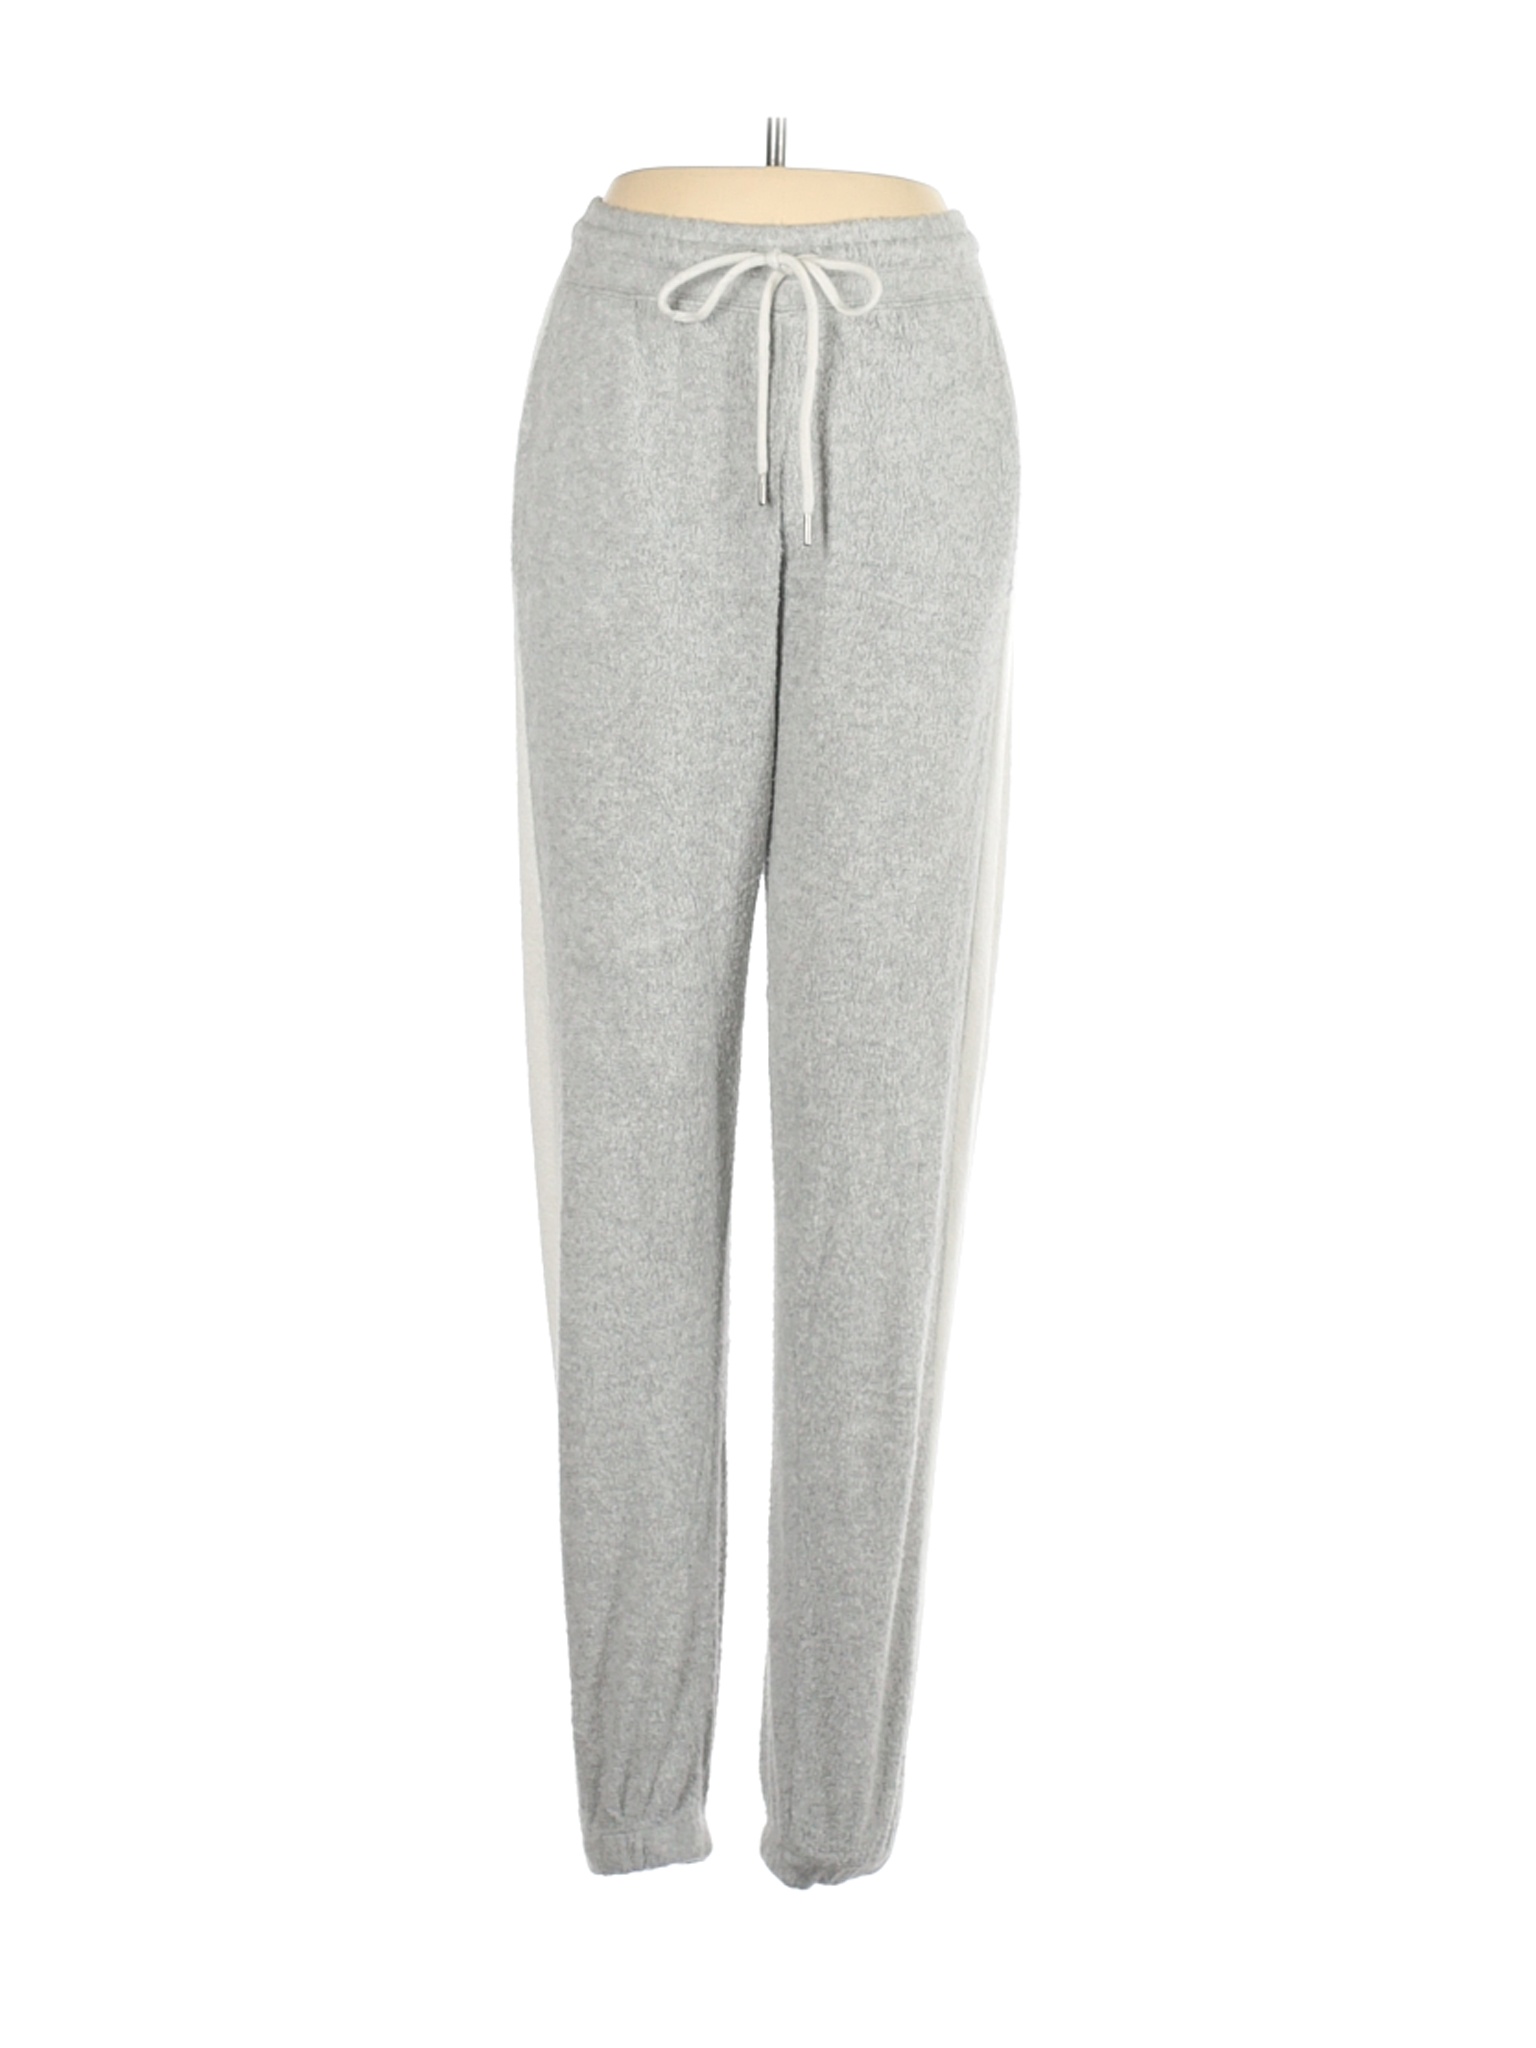 Garage Women Gray Sweatpants S | eBay